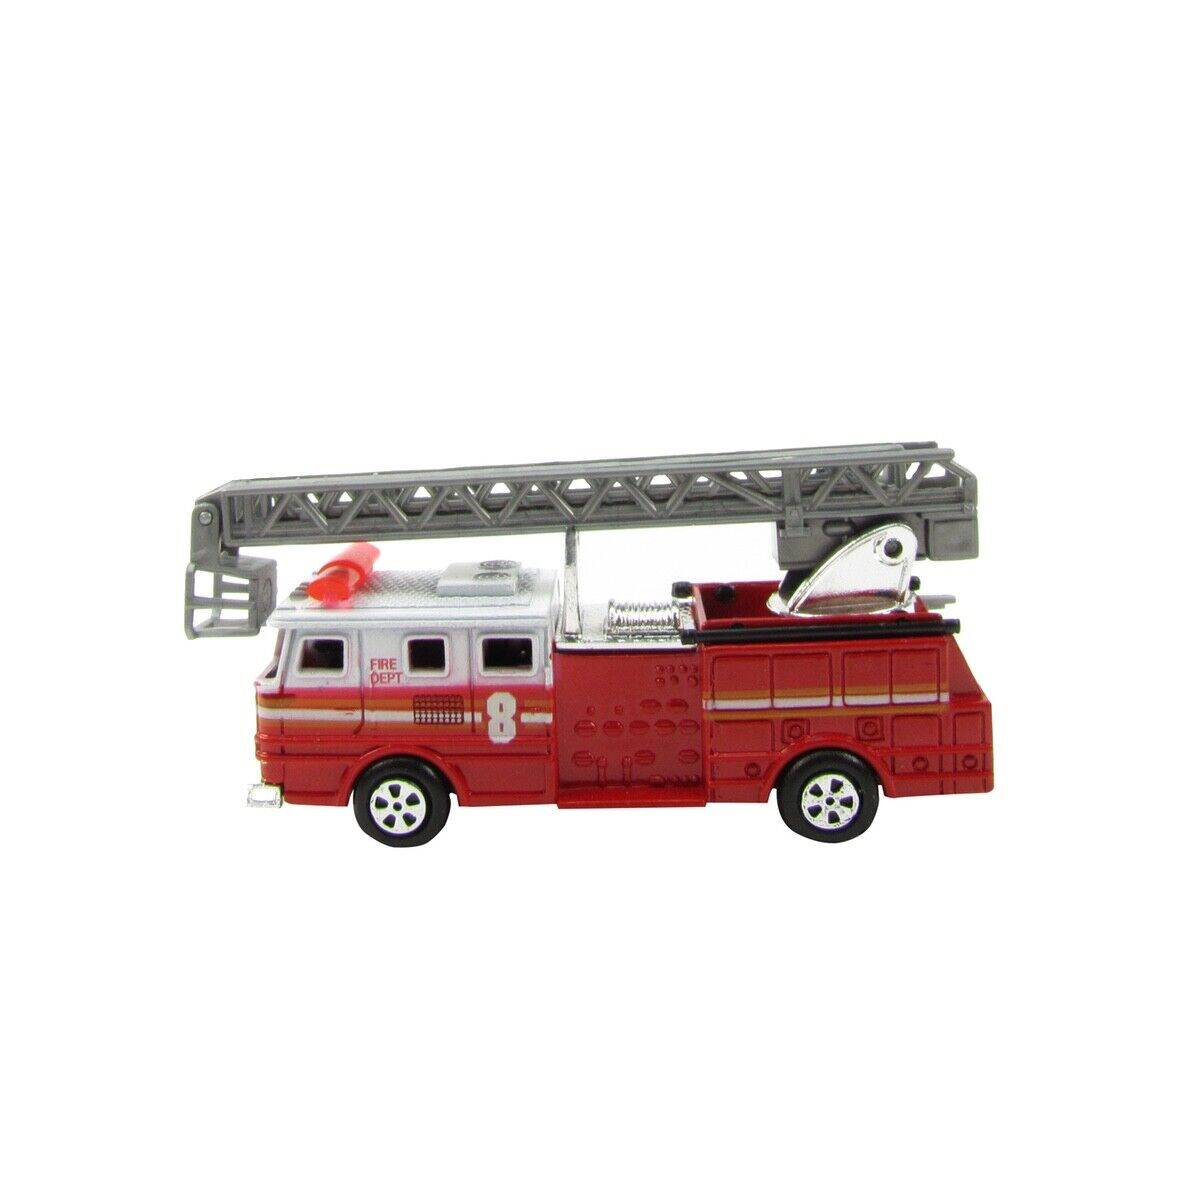 1:87 Scale HO Gauge Fire Engine Truck Model Train Accessory Toy Pencil Sharpener